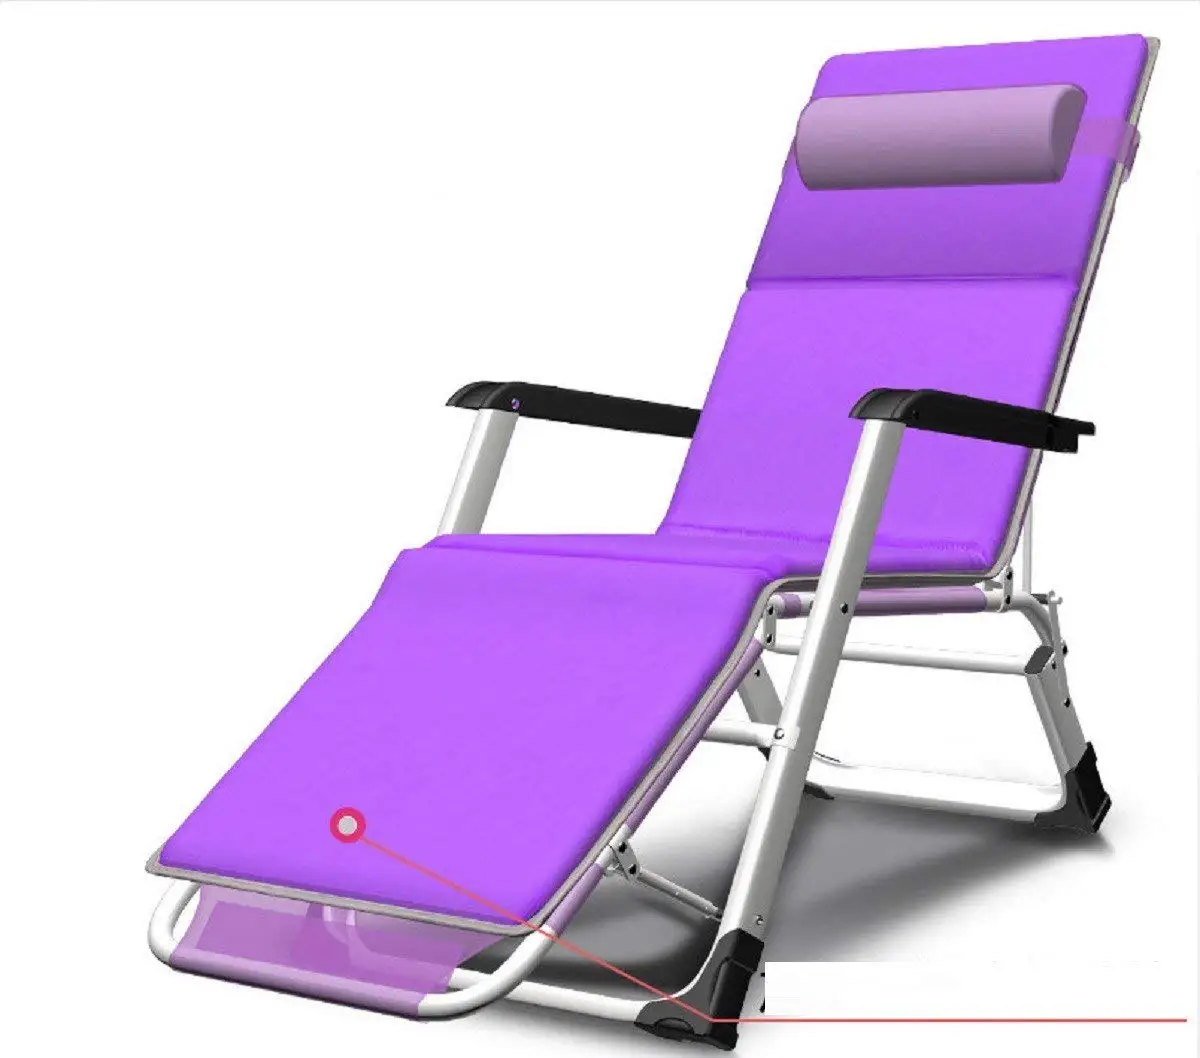 Buy ZLJTYN Lounge Chairs, DECK Chairs, Outdoor Indoor Adjustable Nap